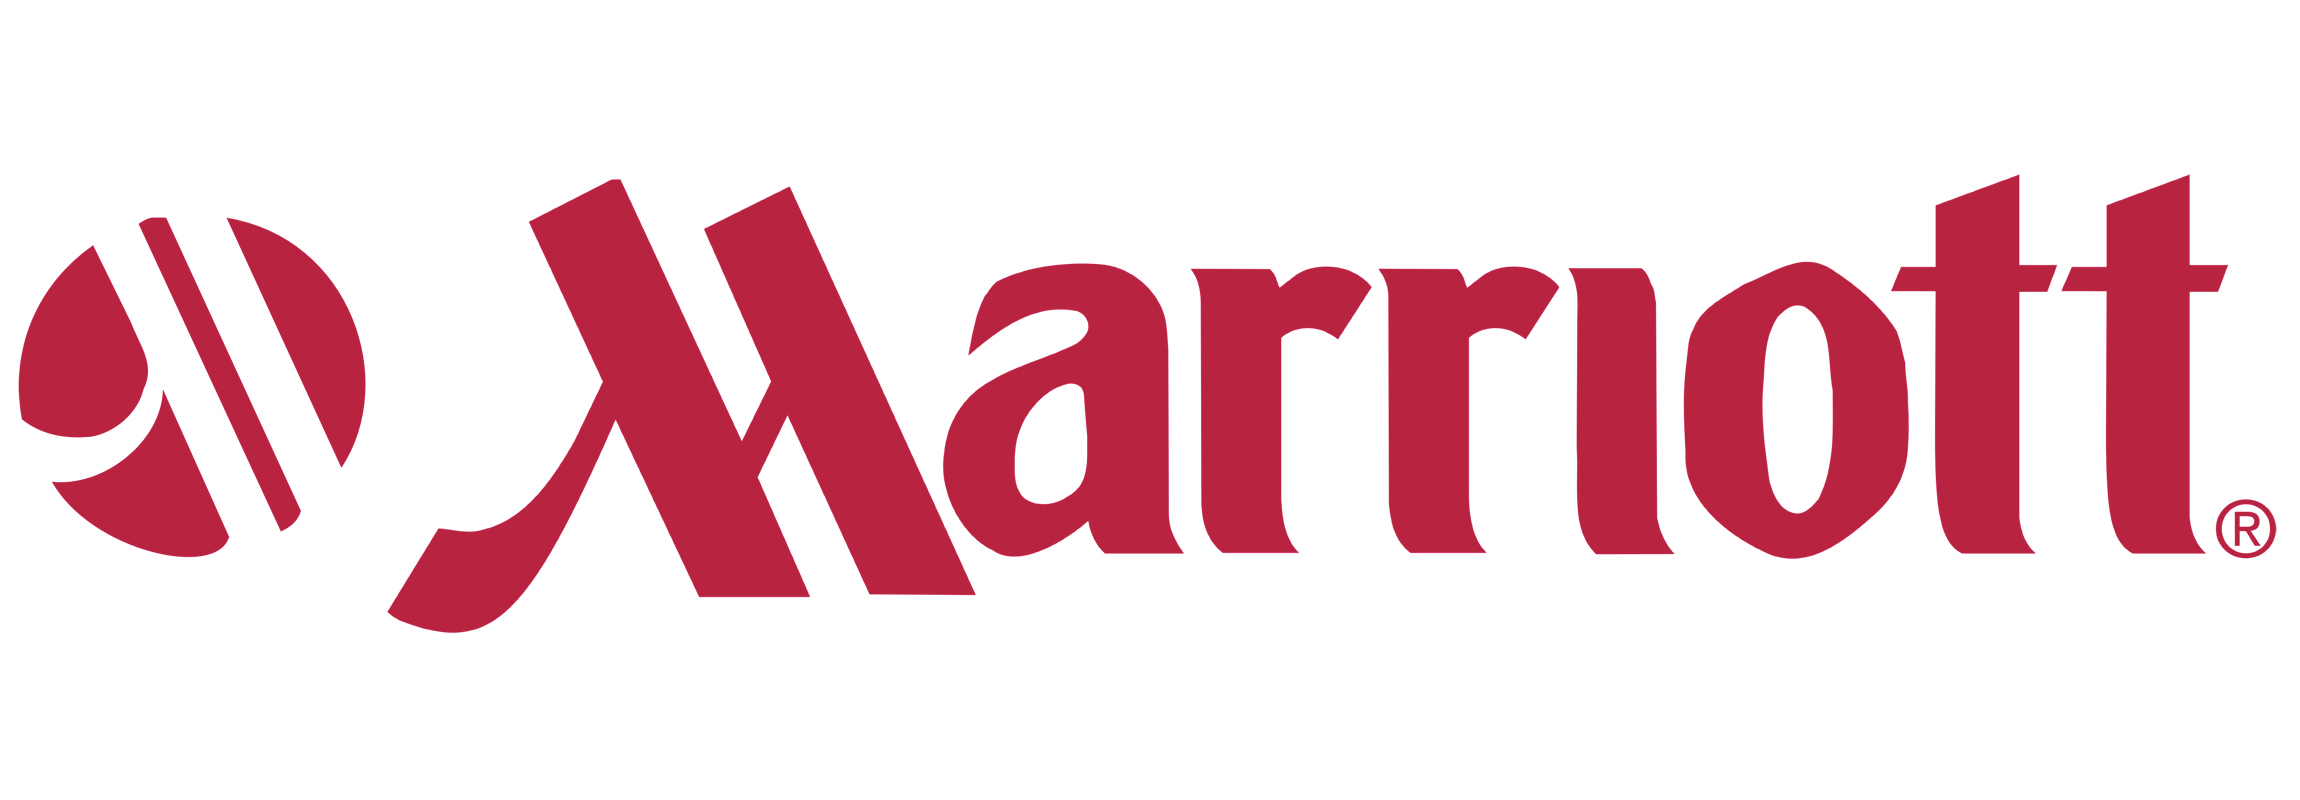 Marriott Brand Logo